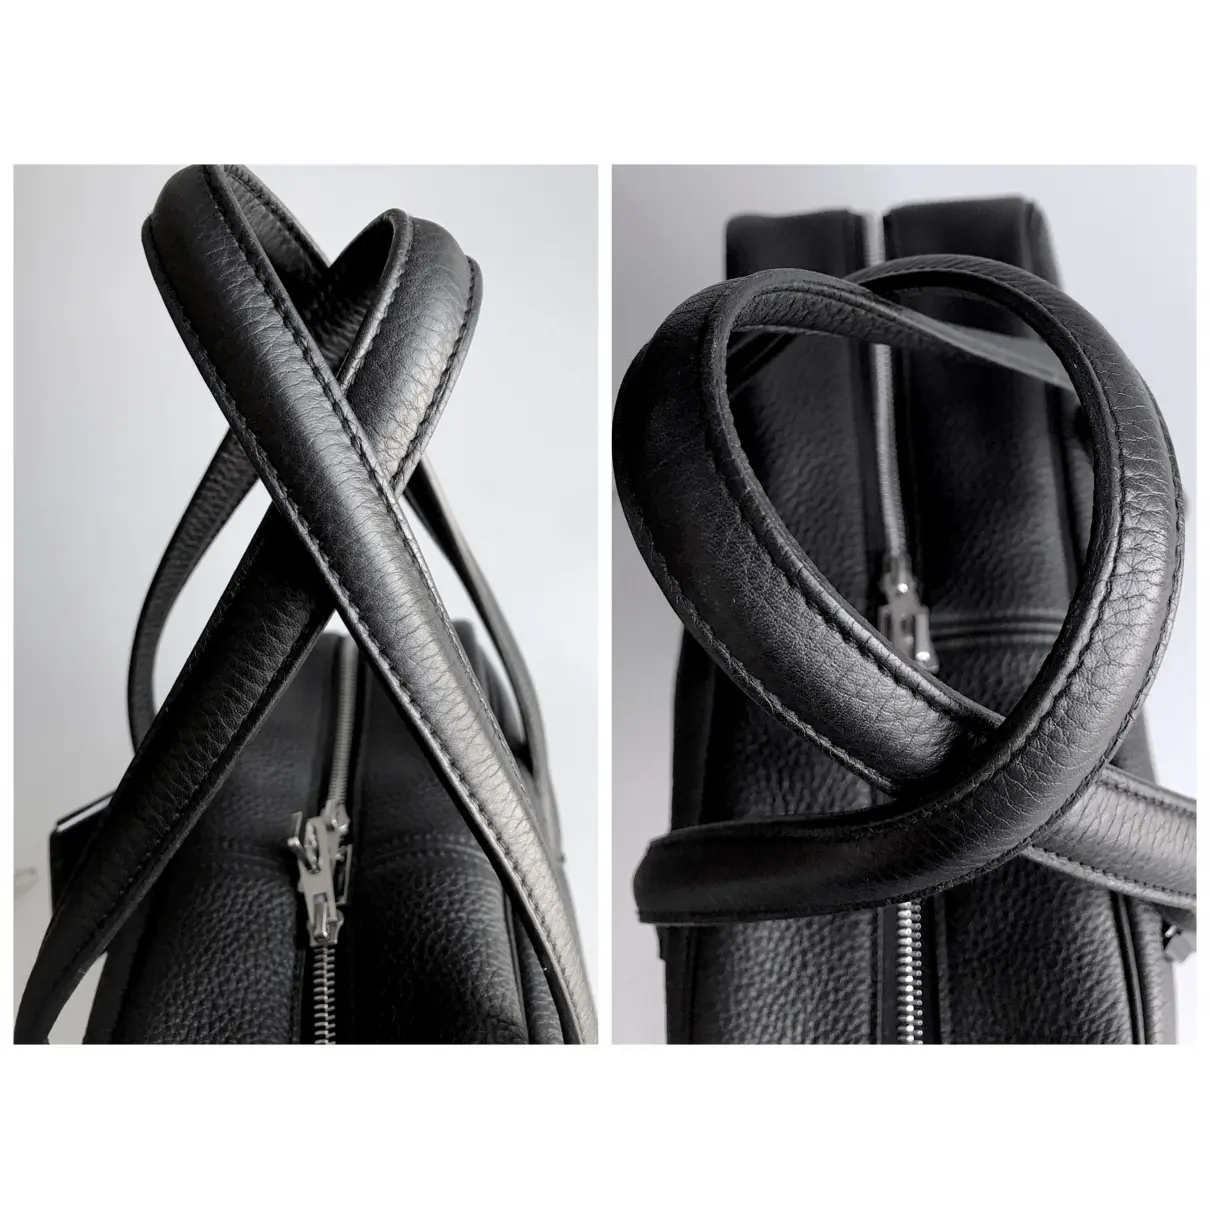 Victoria leather handbag Hermès